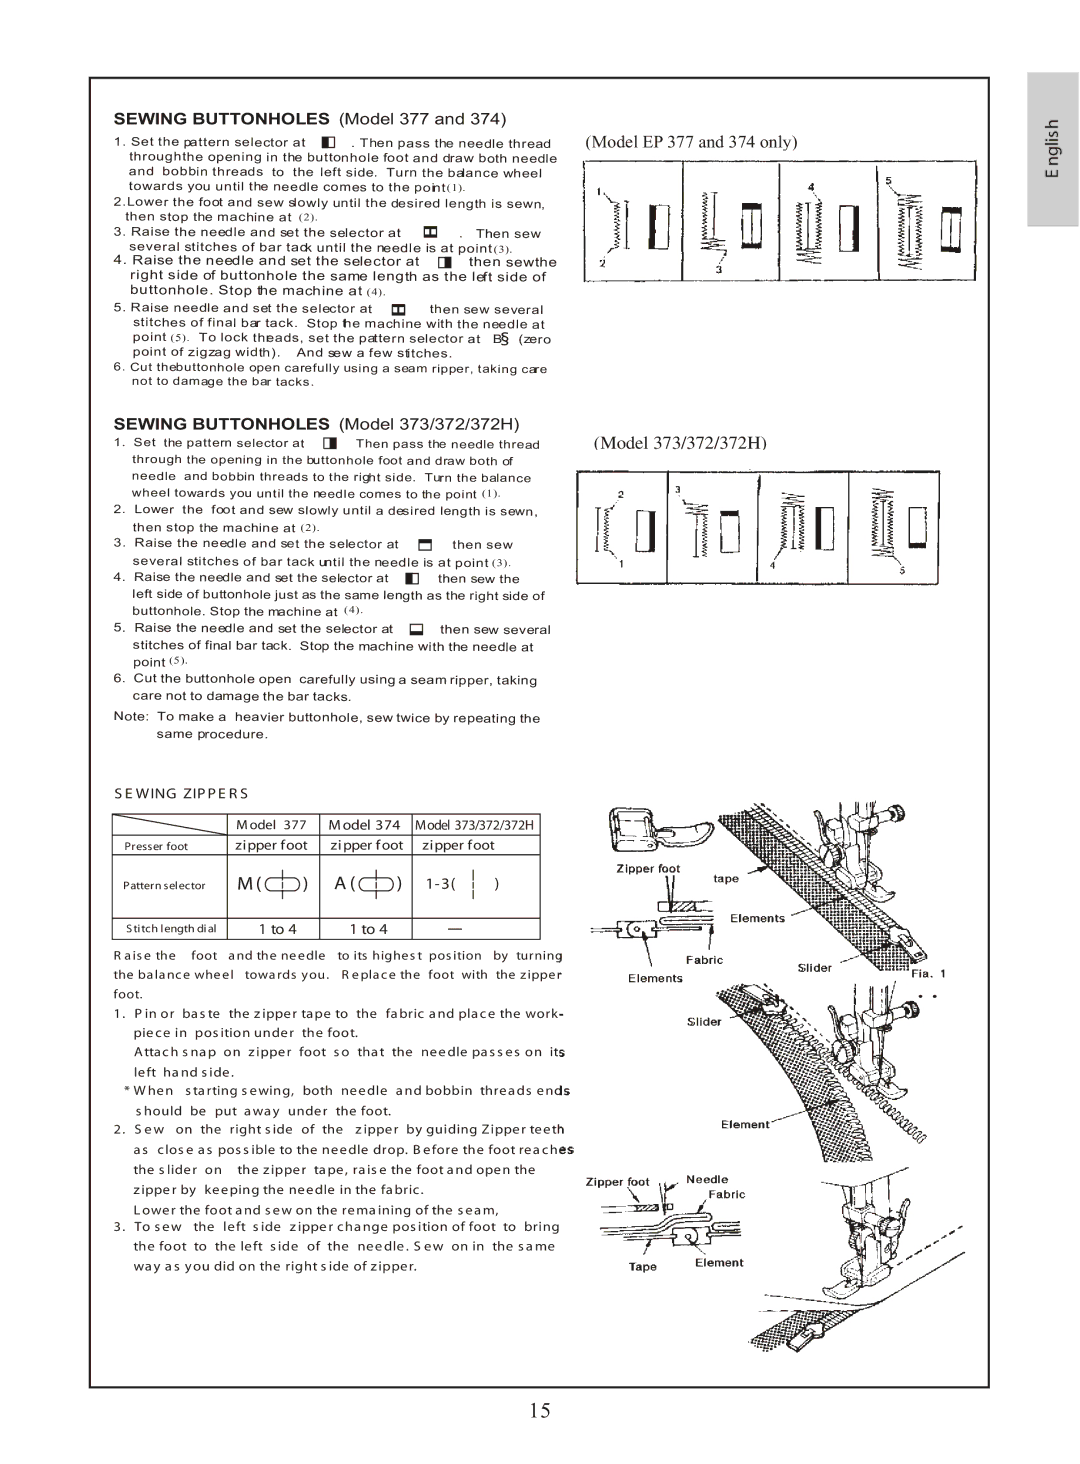 Euro-Pro instruction manual Nglish, ± ¡, Sewing Buttonholes Model 373/372/372H, ¡¡± 